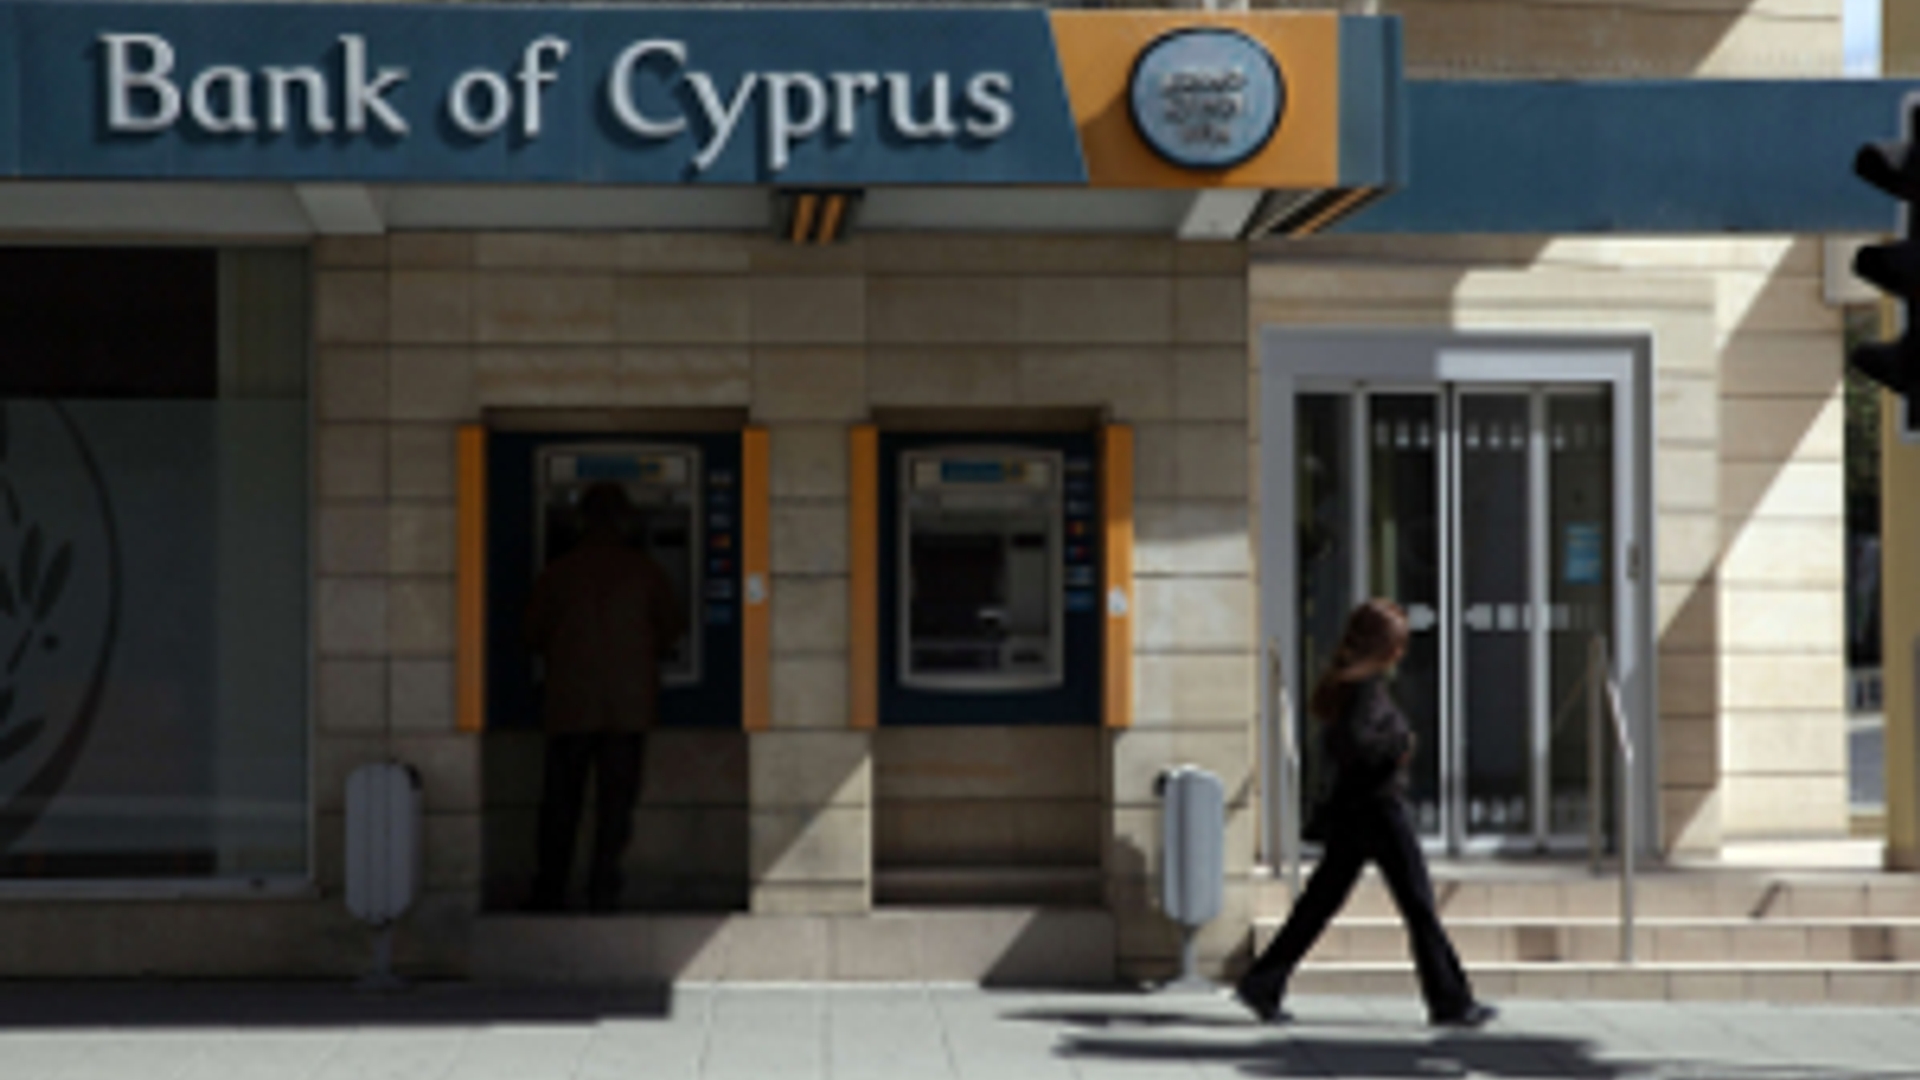 ANP-Cyprus_300.jpg